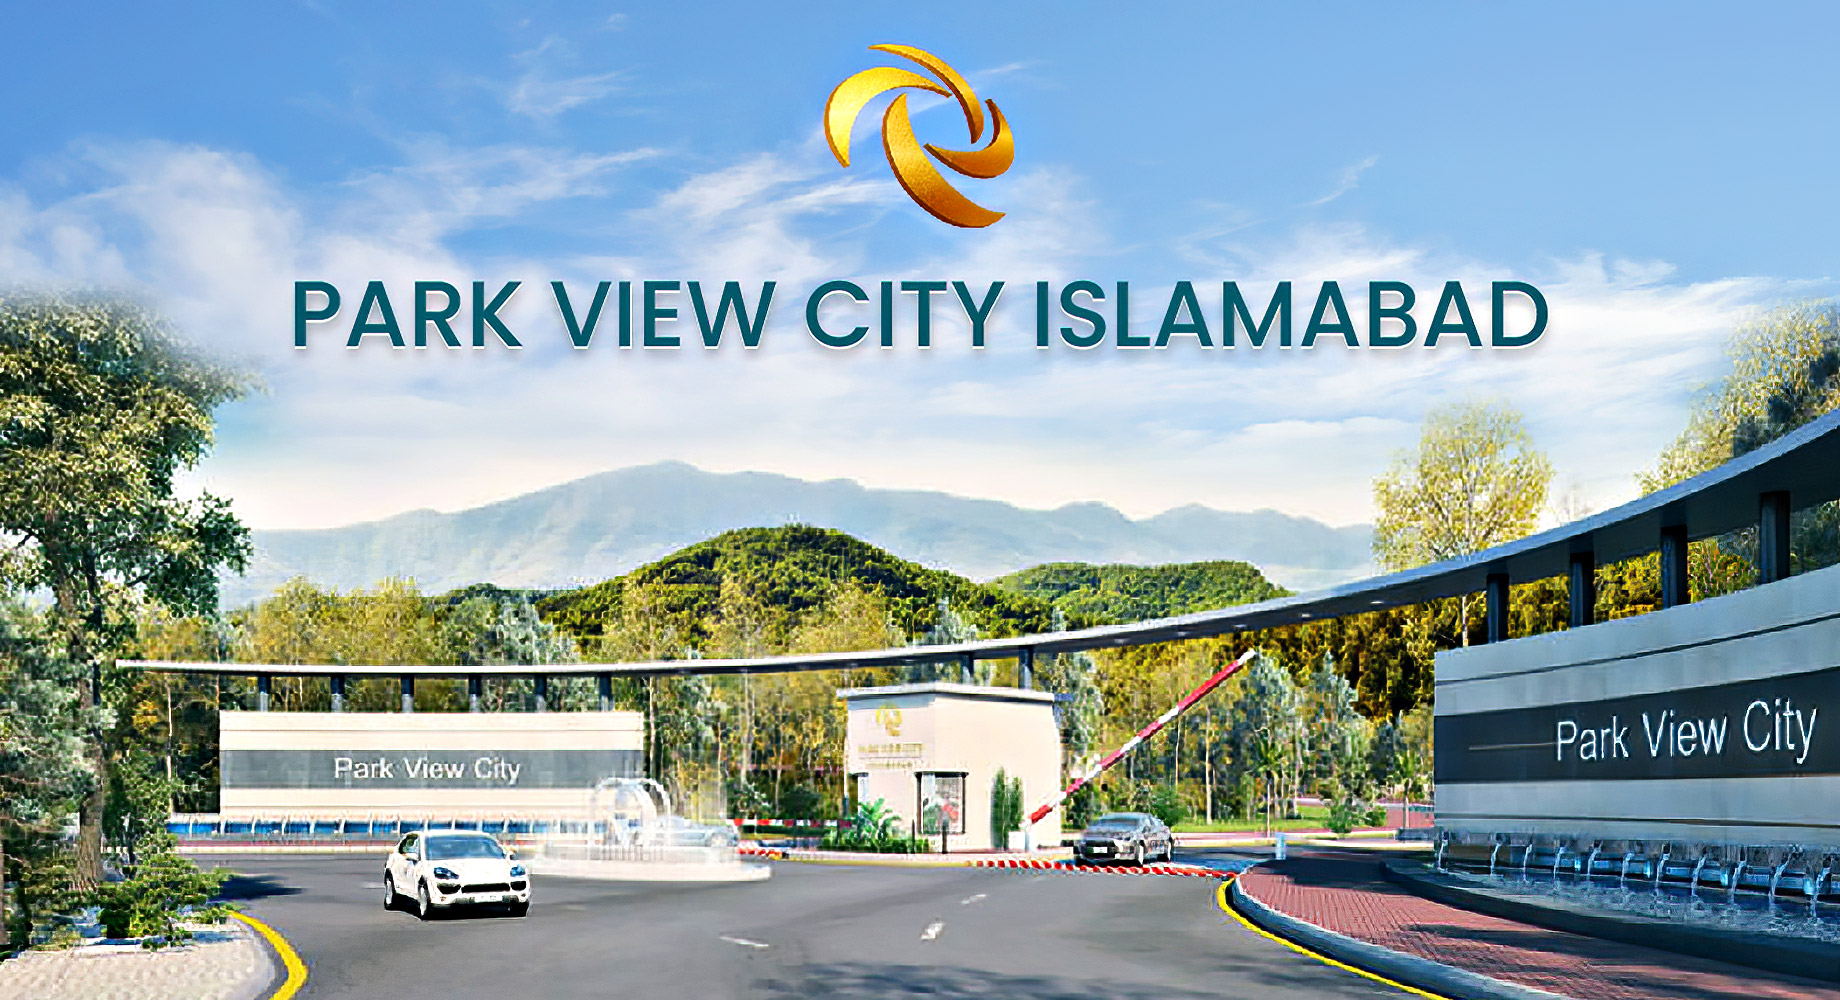 Park View City - Islamabad, Pakistan